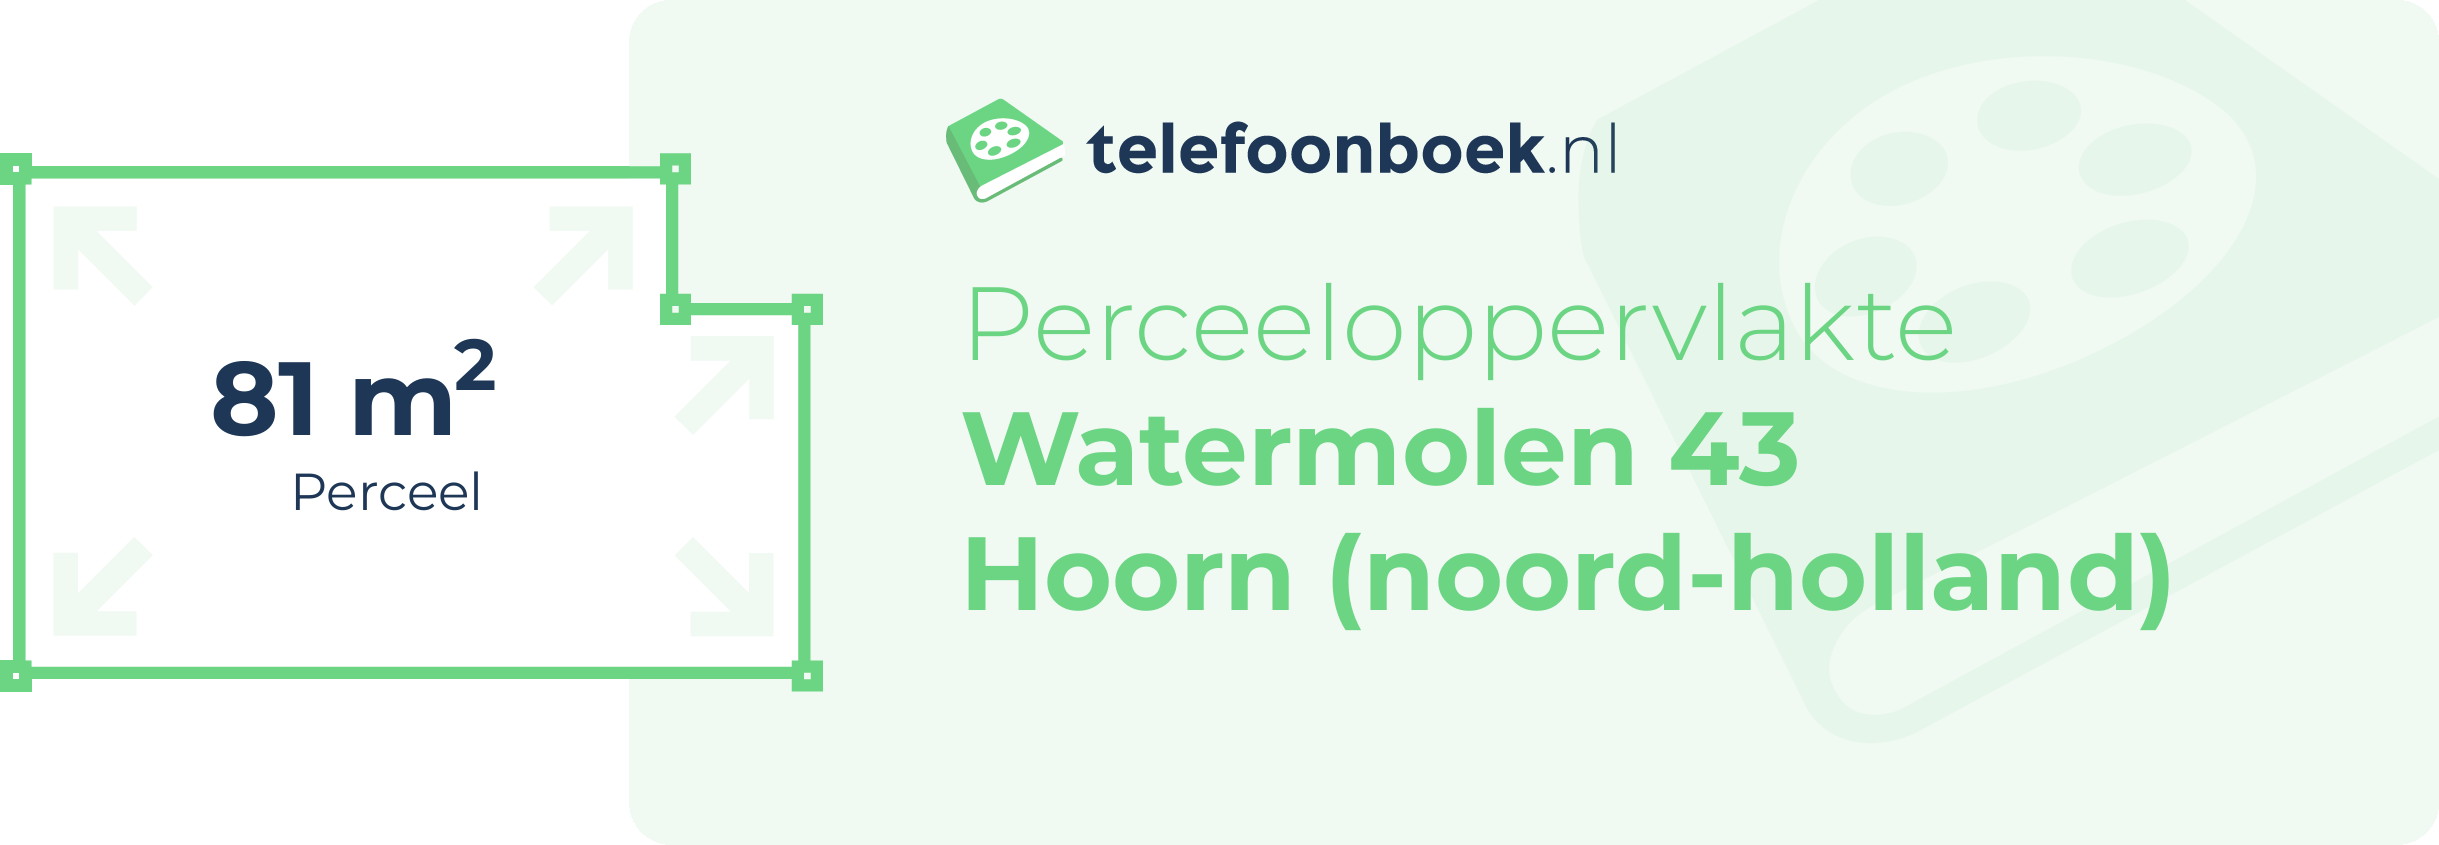 Perceeloppervlakte Watermolen 43 Hoorn (Noord-Holland)